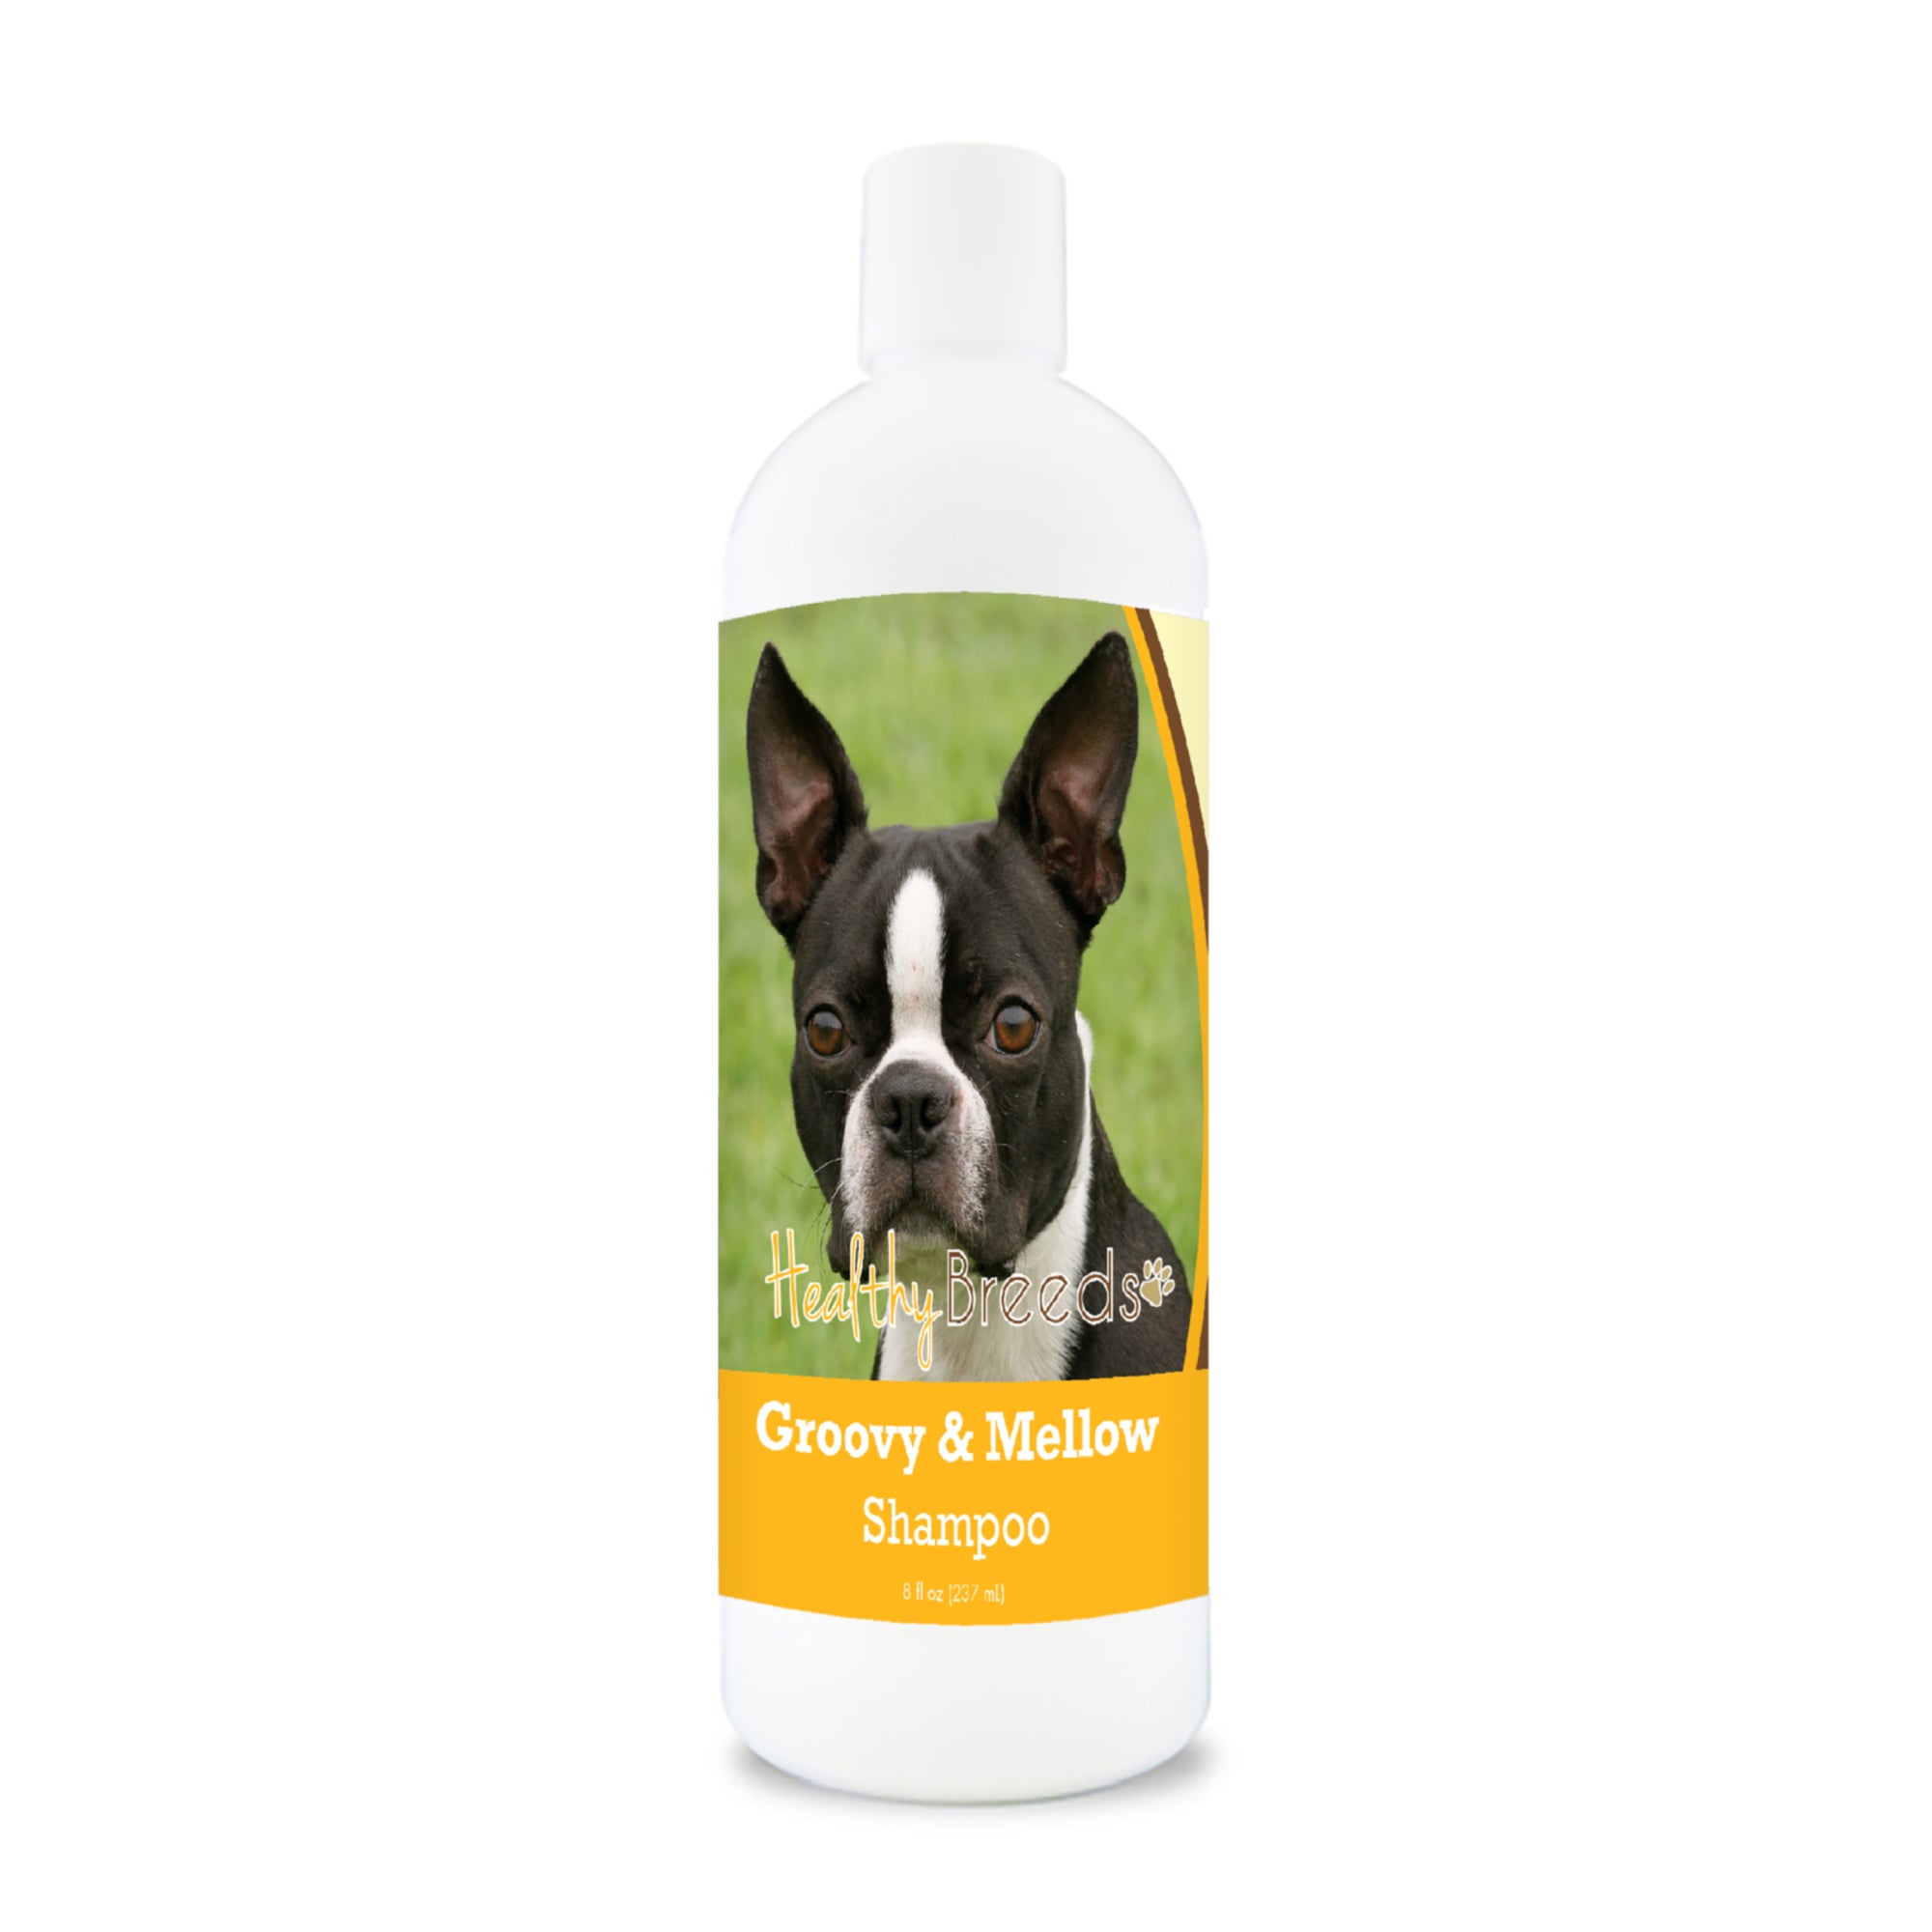 Boston Terrier Groovy & Mellow Shampoo 8 oz